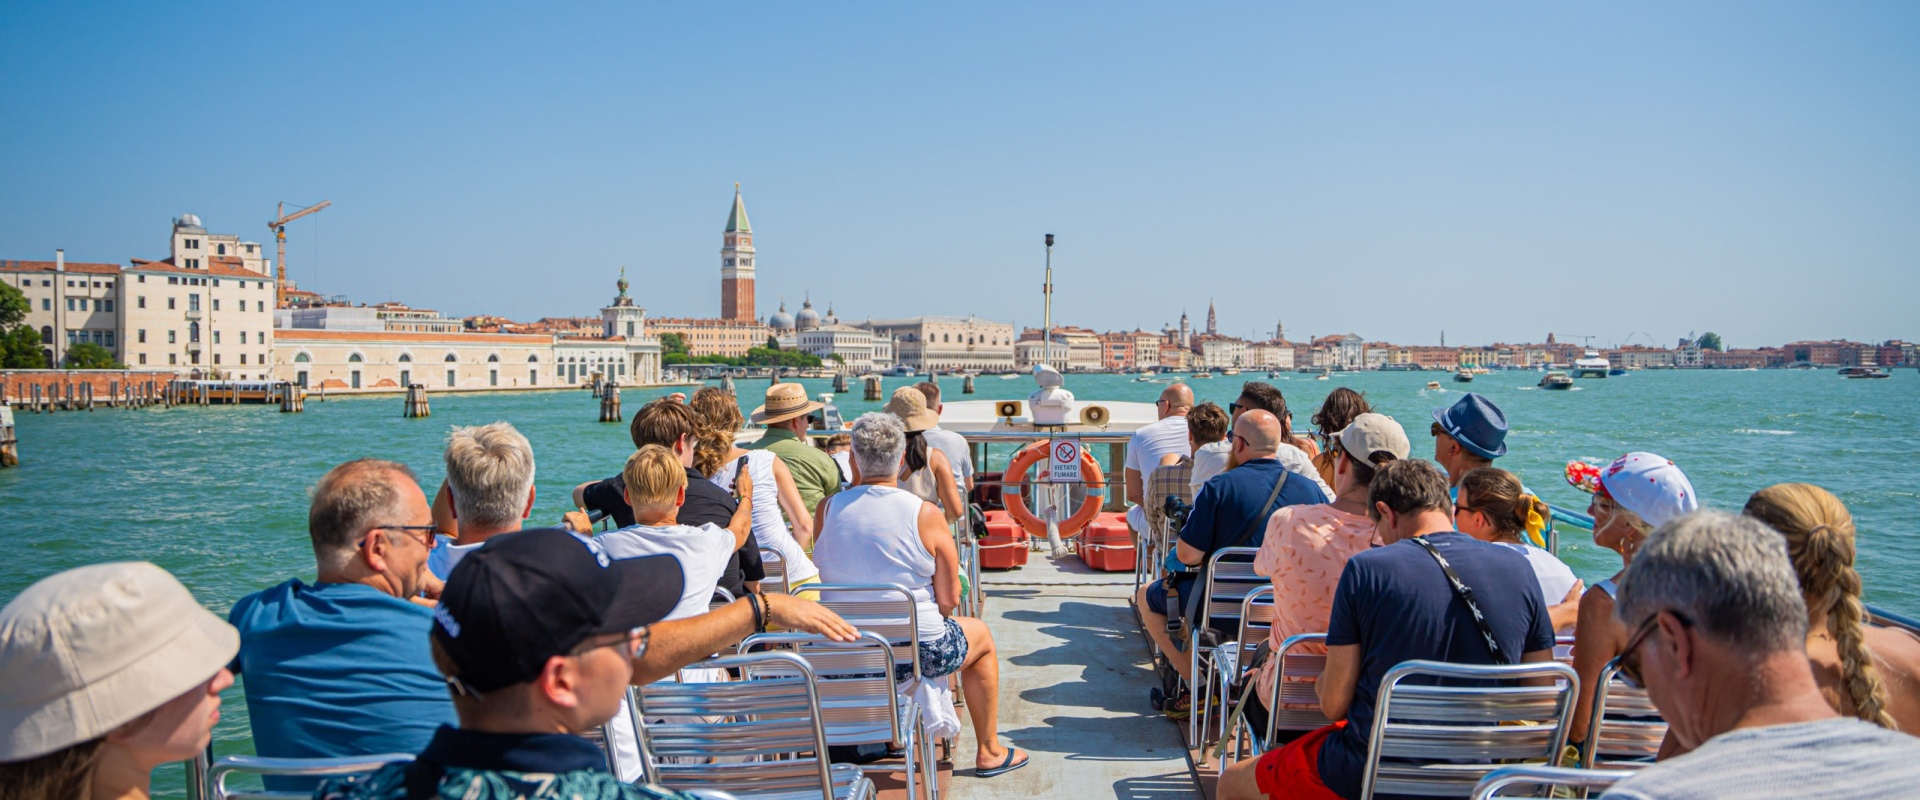 Venice day trip | Adriatic Lines by Kompas